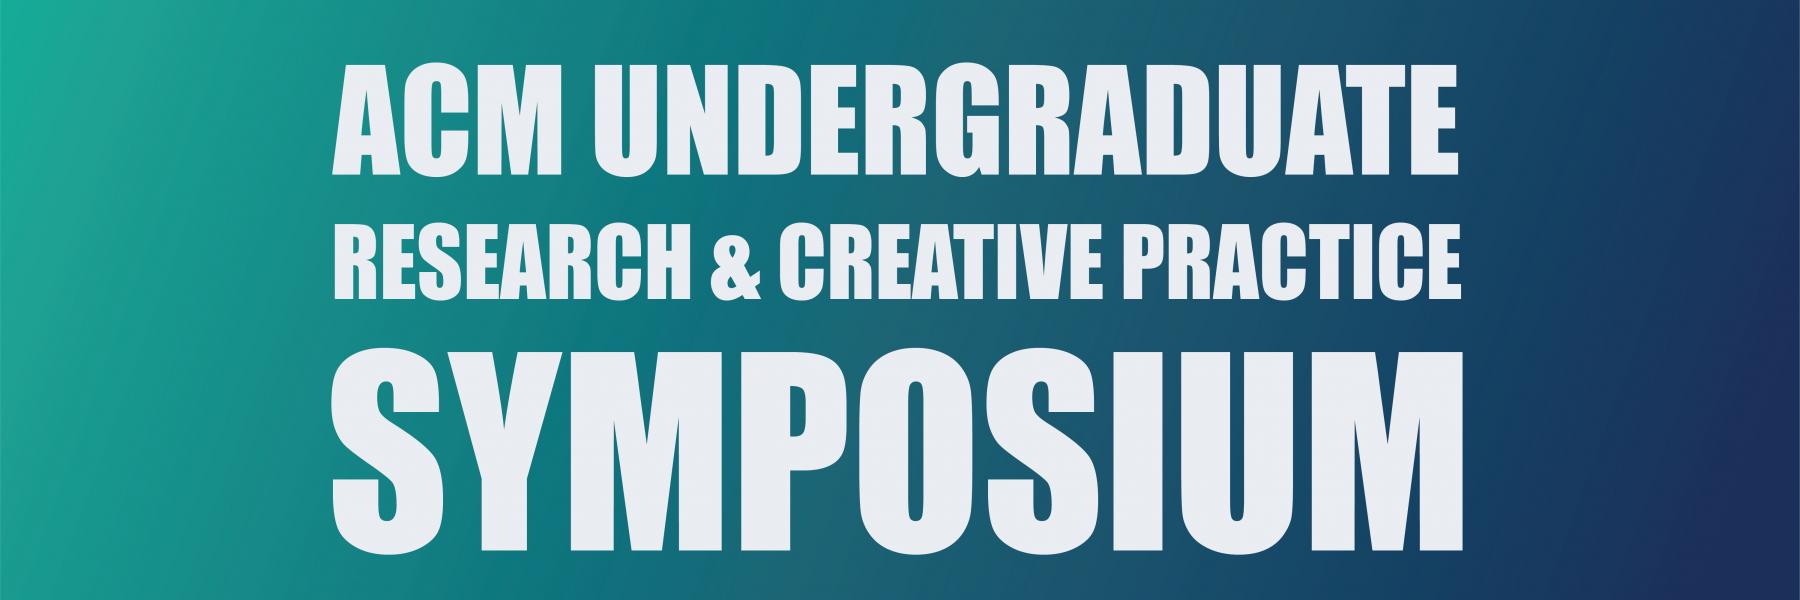 ACM Undergraduate Research and Creative Practice Symposium banner